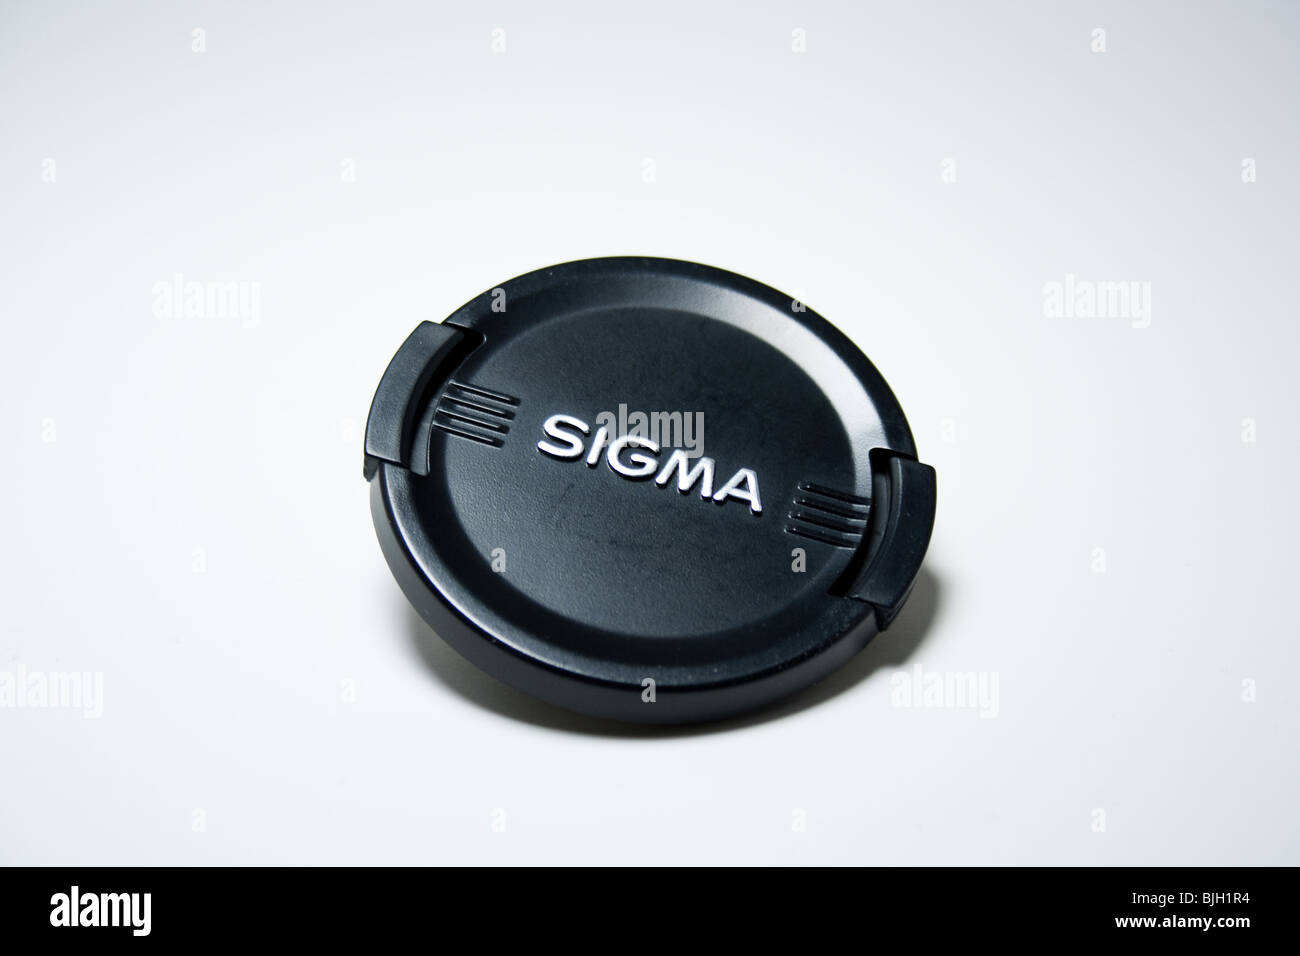 Tapa de lente lente sigma negro logotipo de marca closeup macro producto Foto de stock